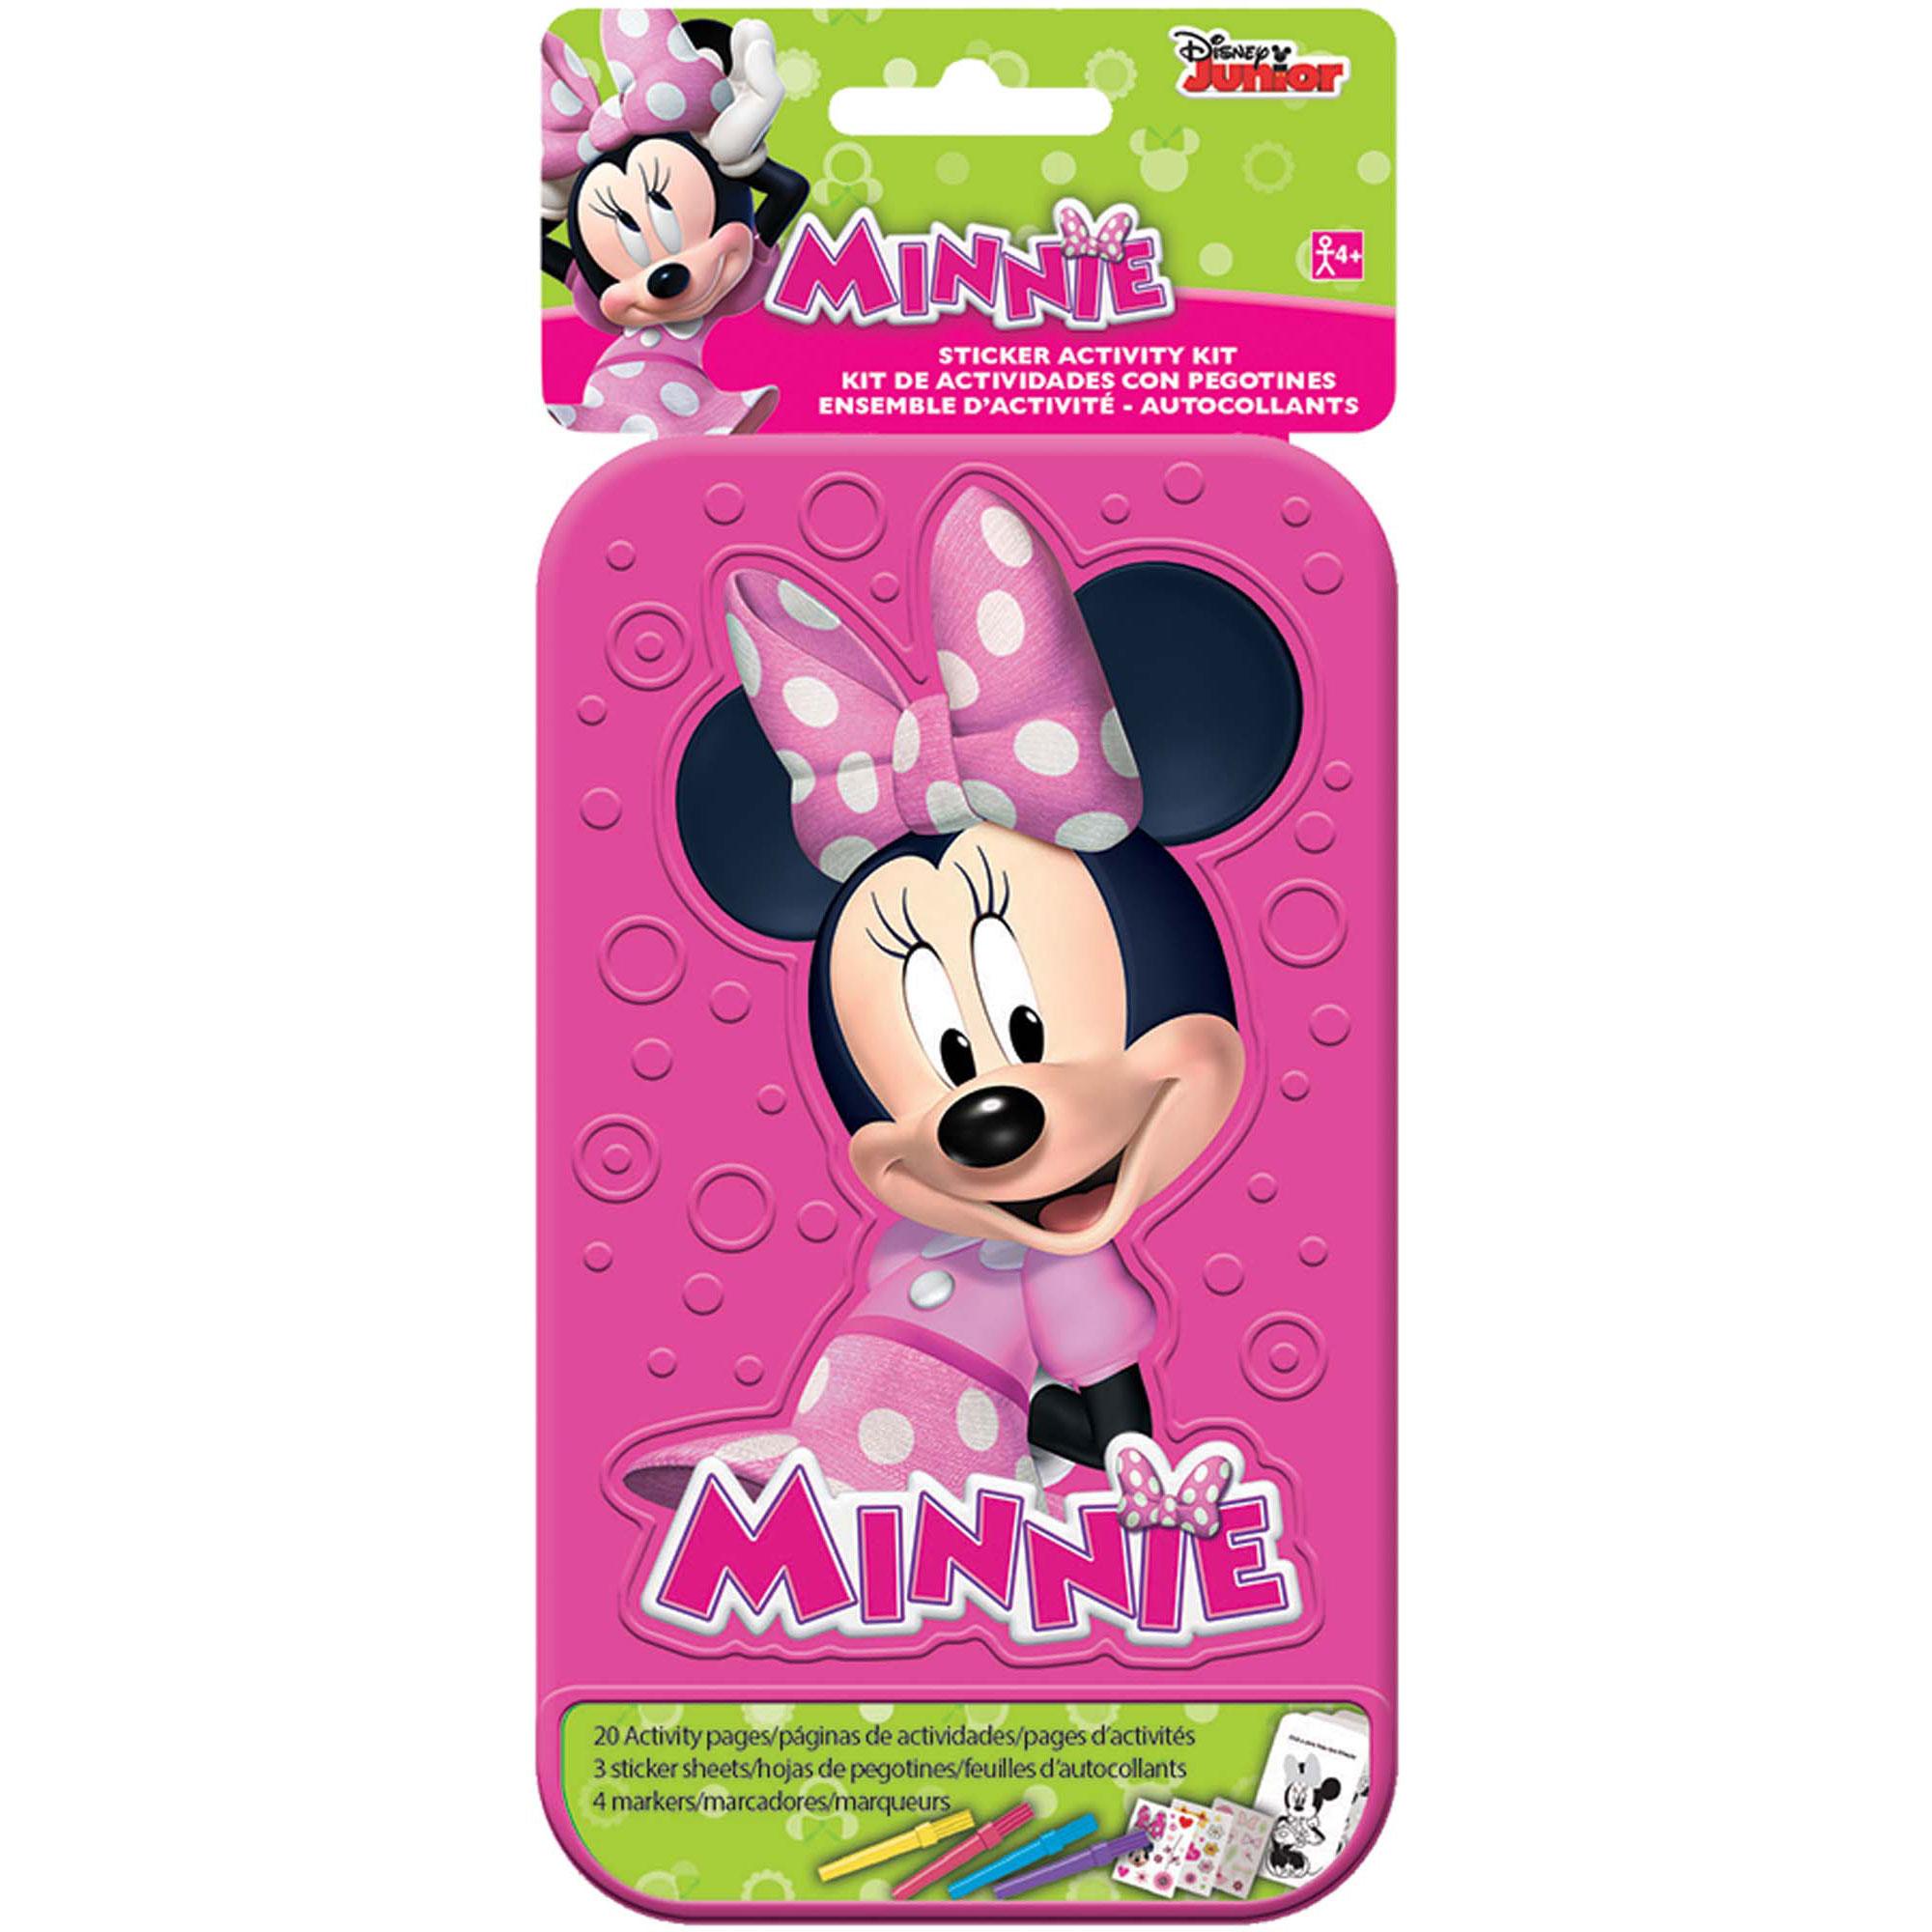 Minnie Sticker Activity Kit Party Favors - Party Centre - Party Centre